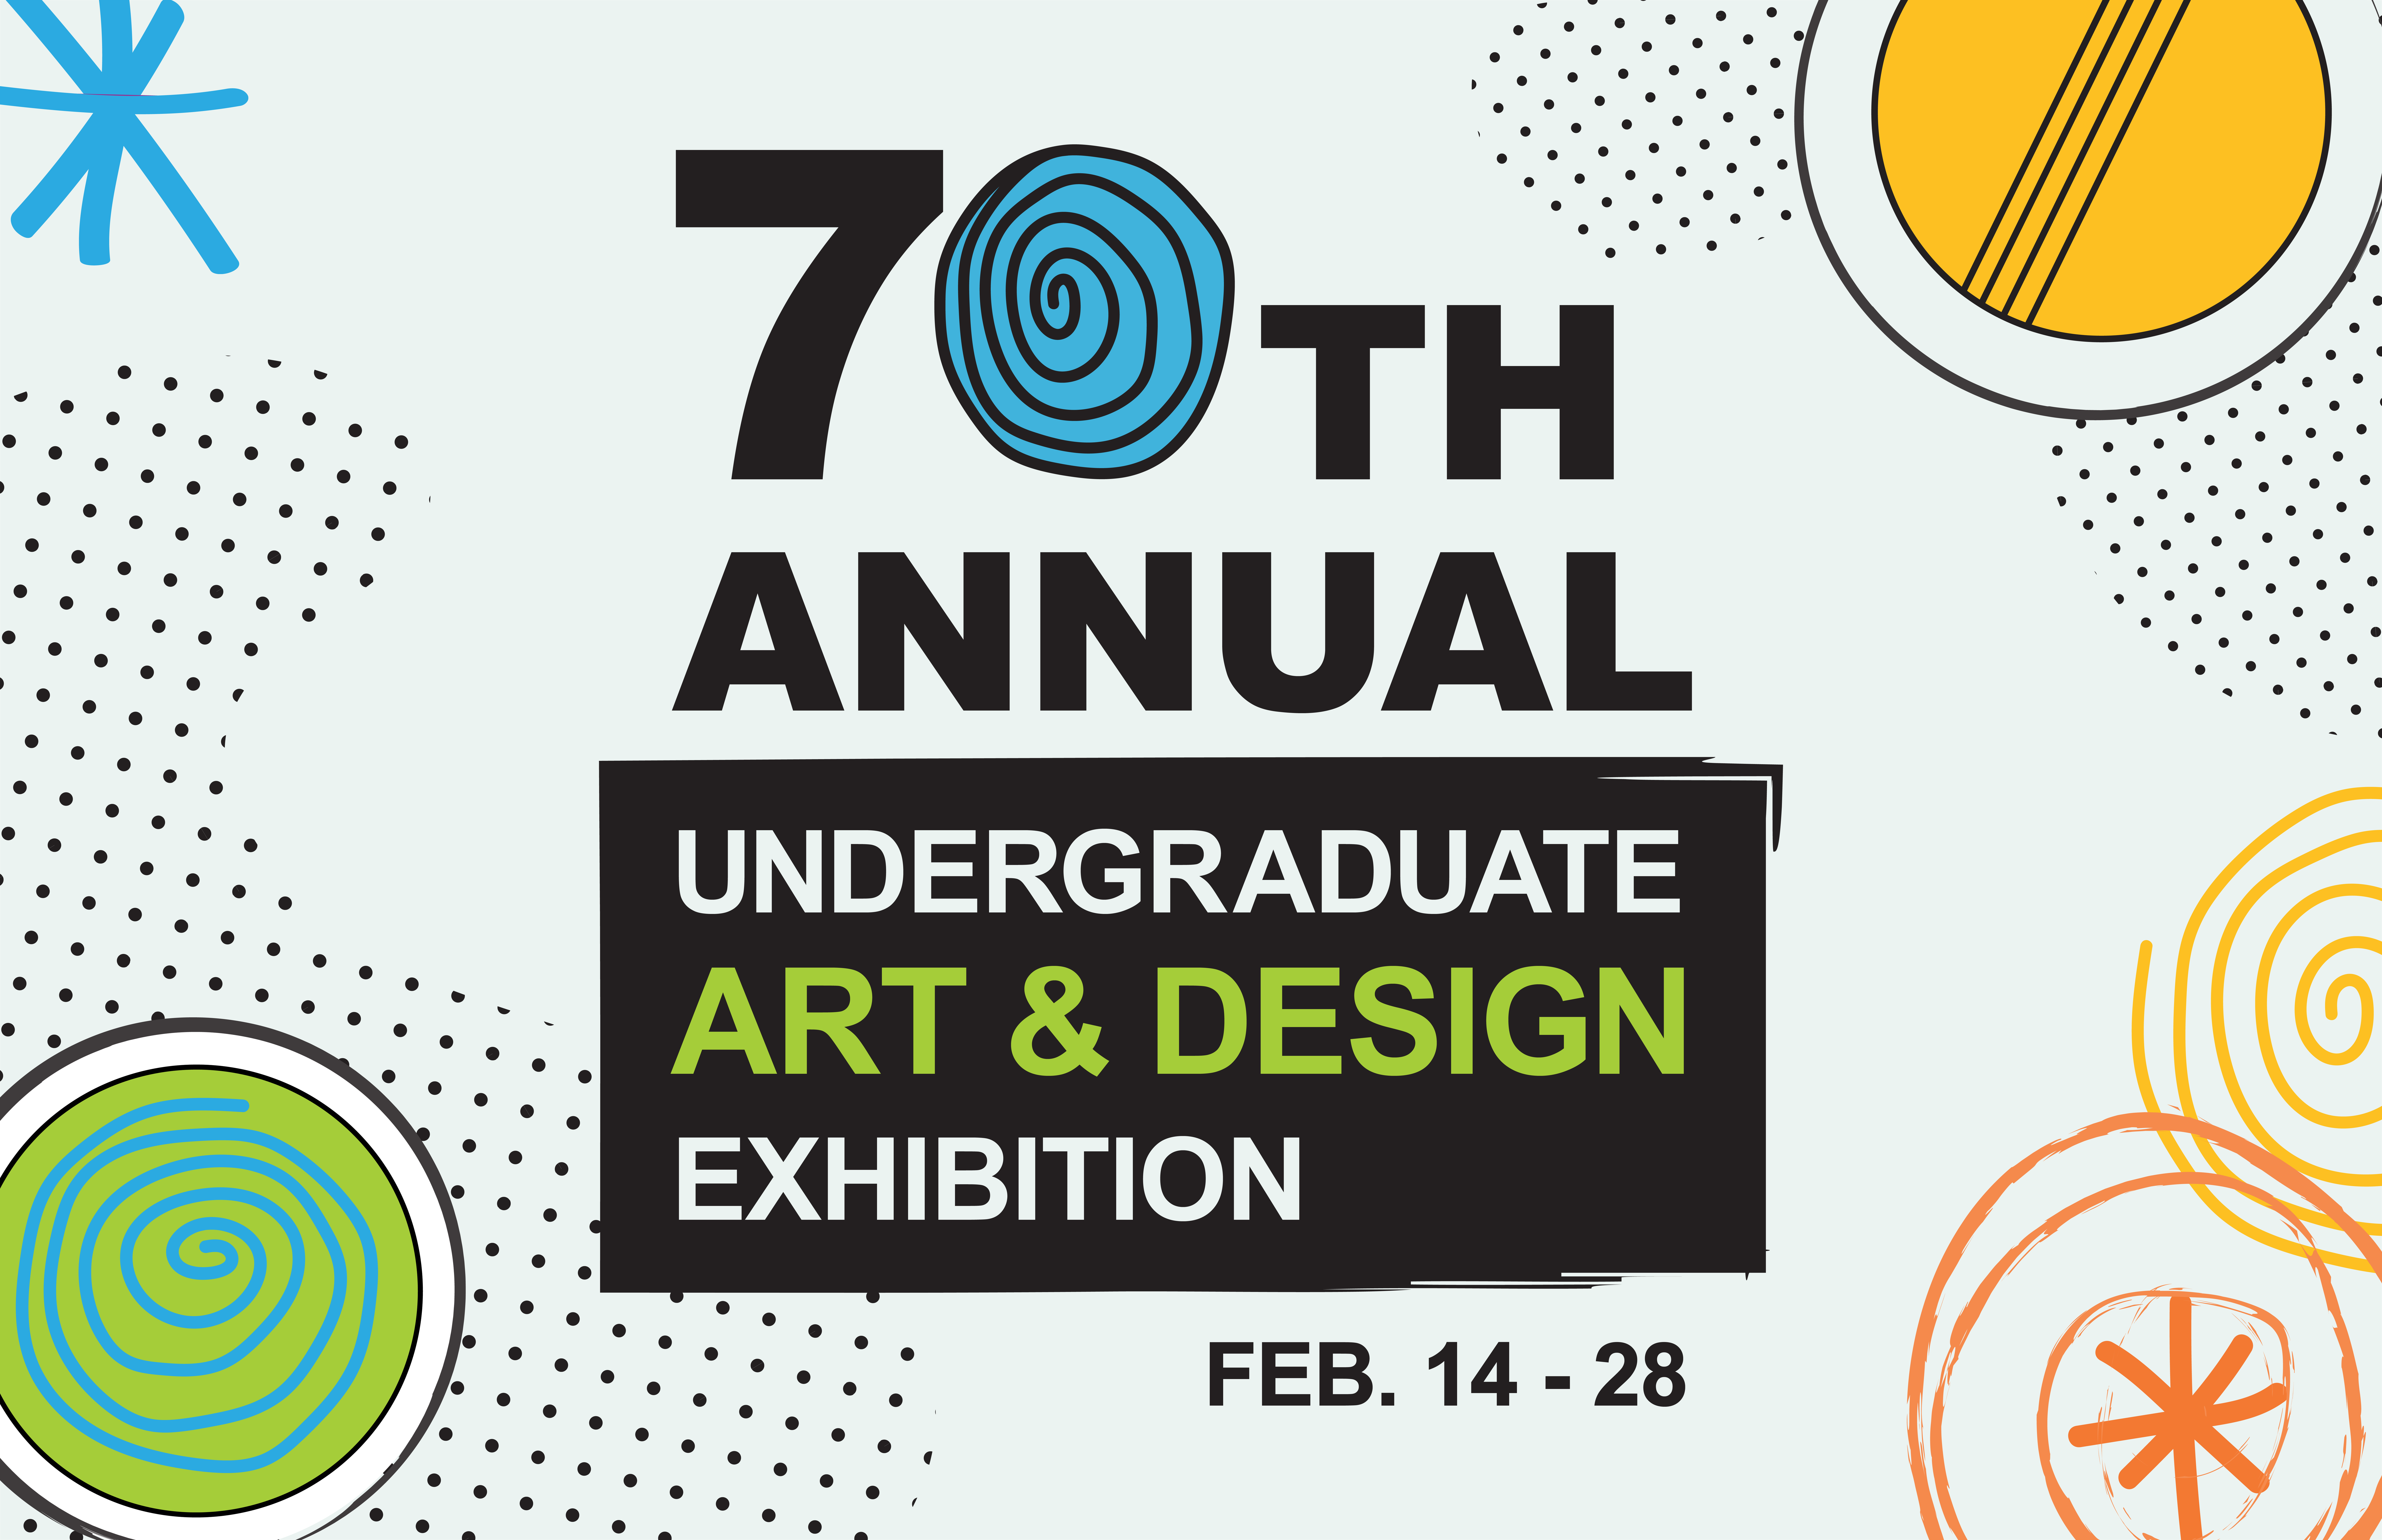 70th Annual Undergraduate Art & Design Exhibition, February 14-28